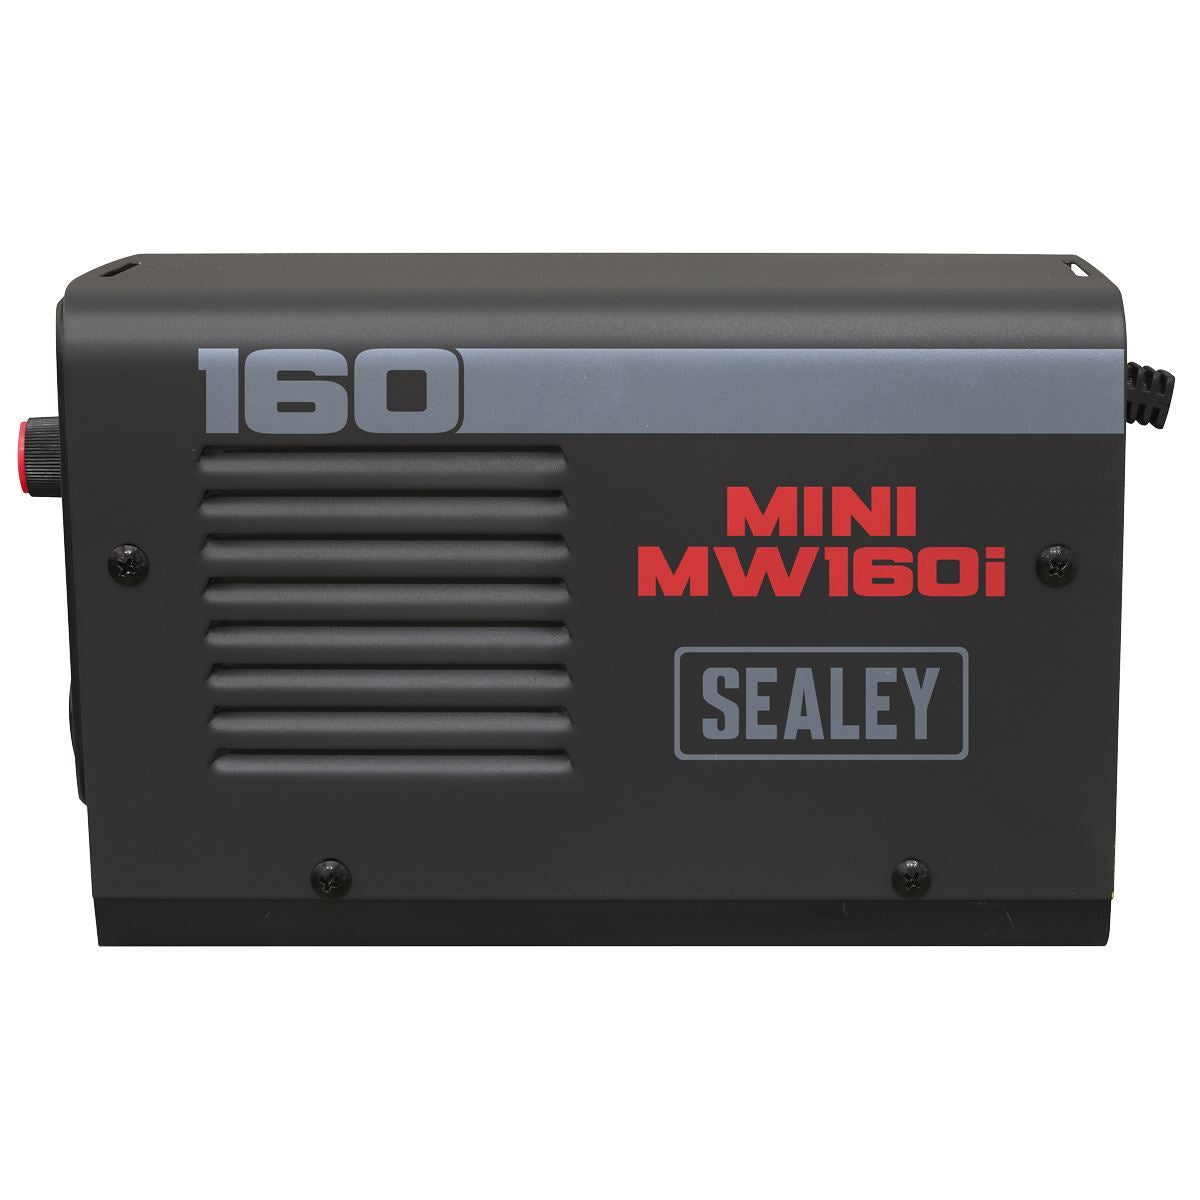 Sealey Inverter Welder 160A 230V